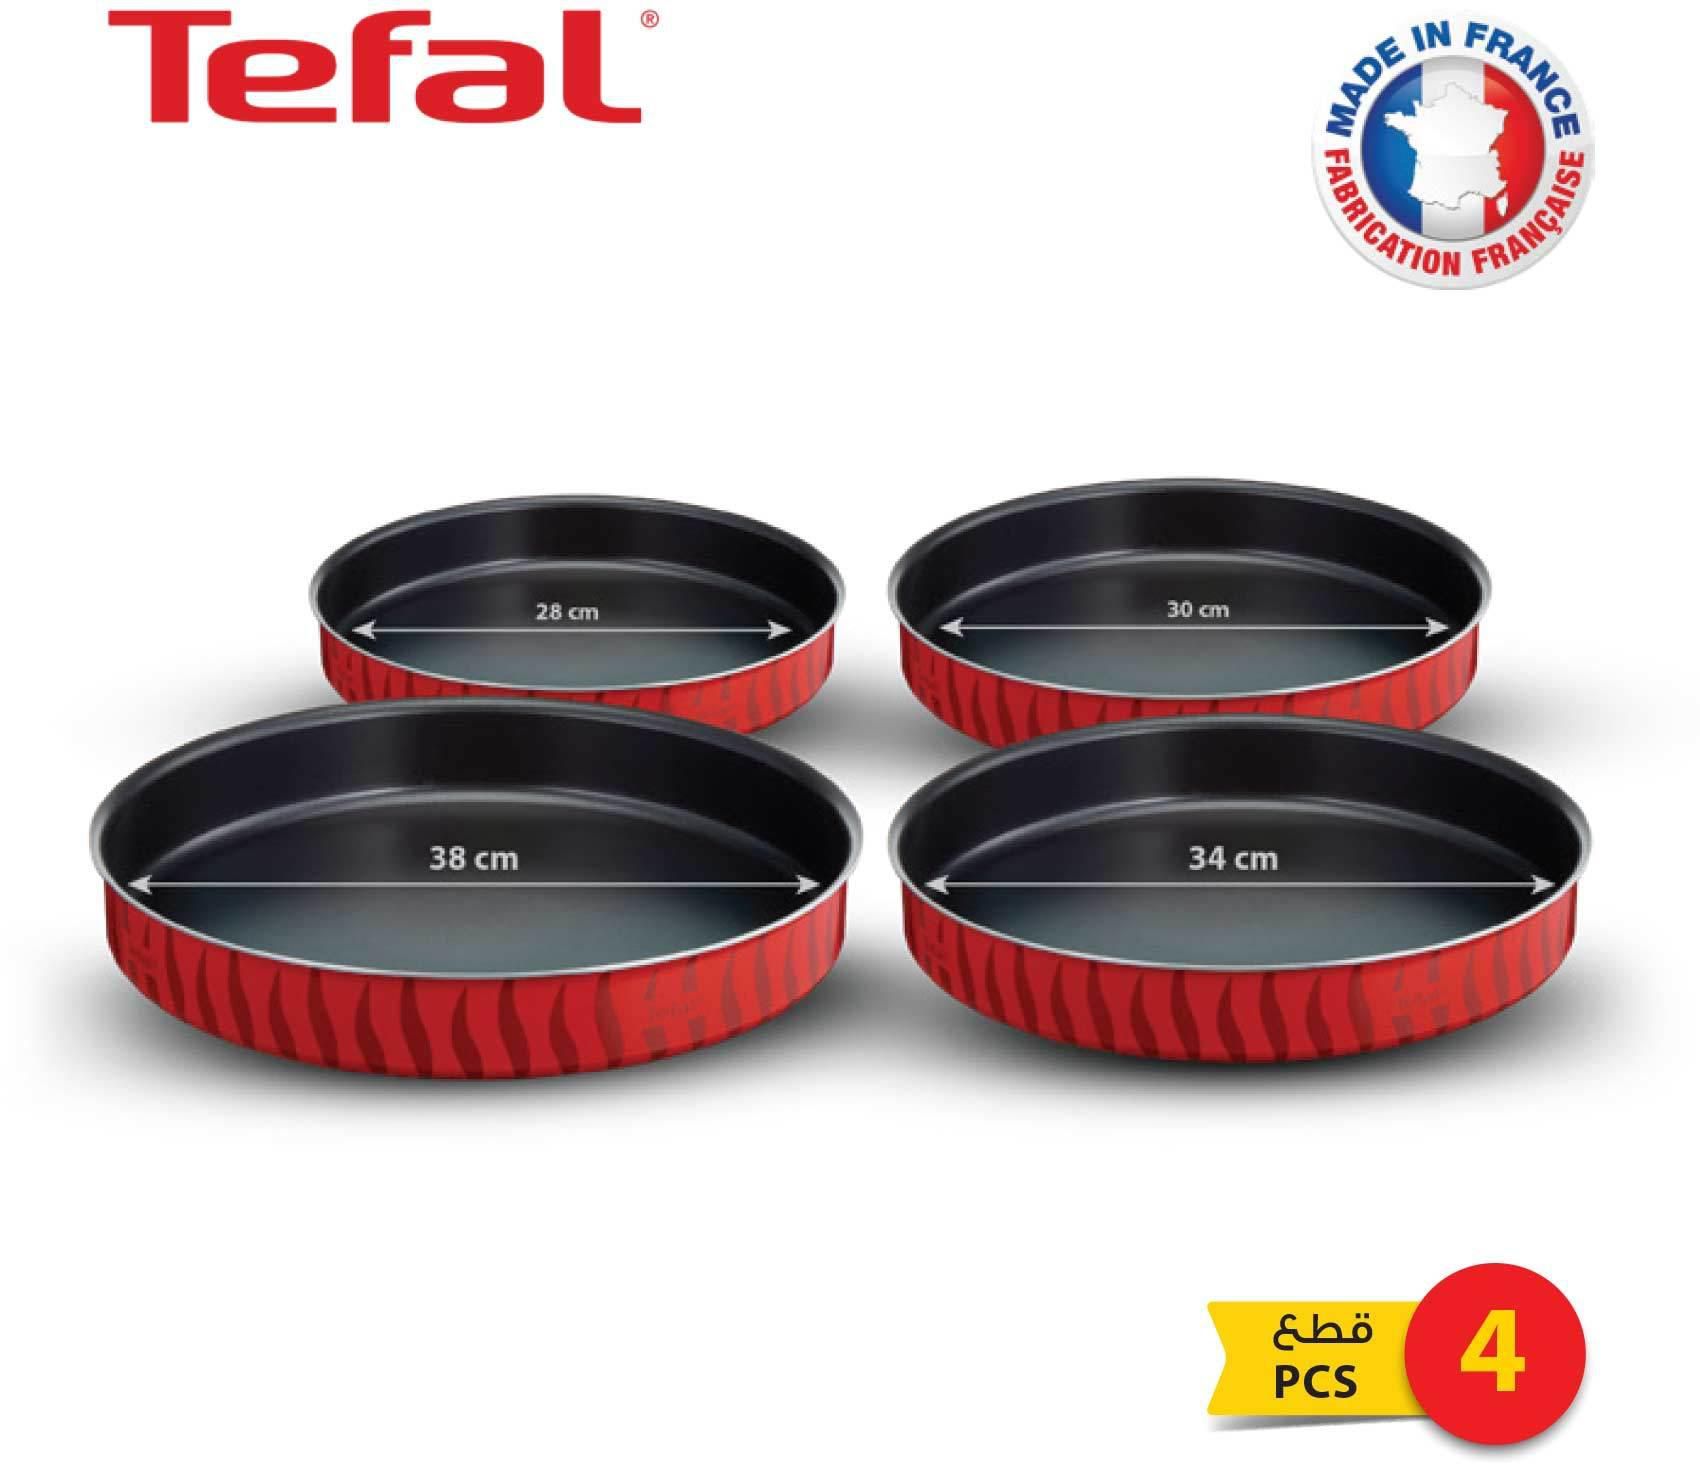 Tefal non-stick oven tray set 4 pieces 28 + 30 + 38 + 34 cm